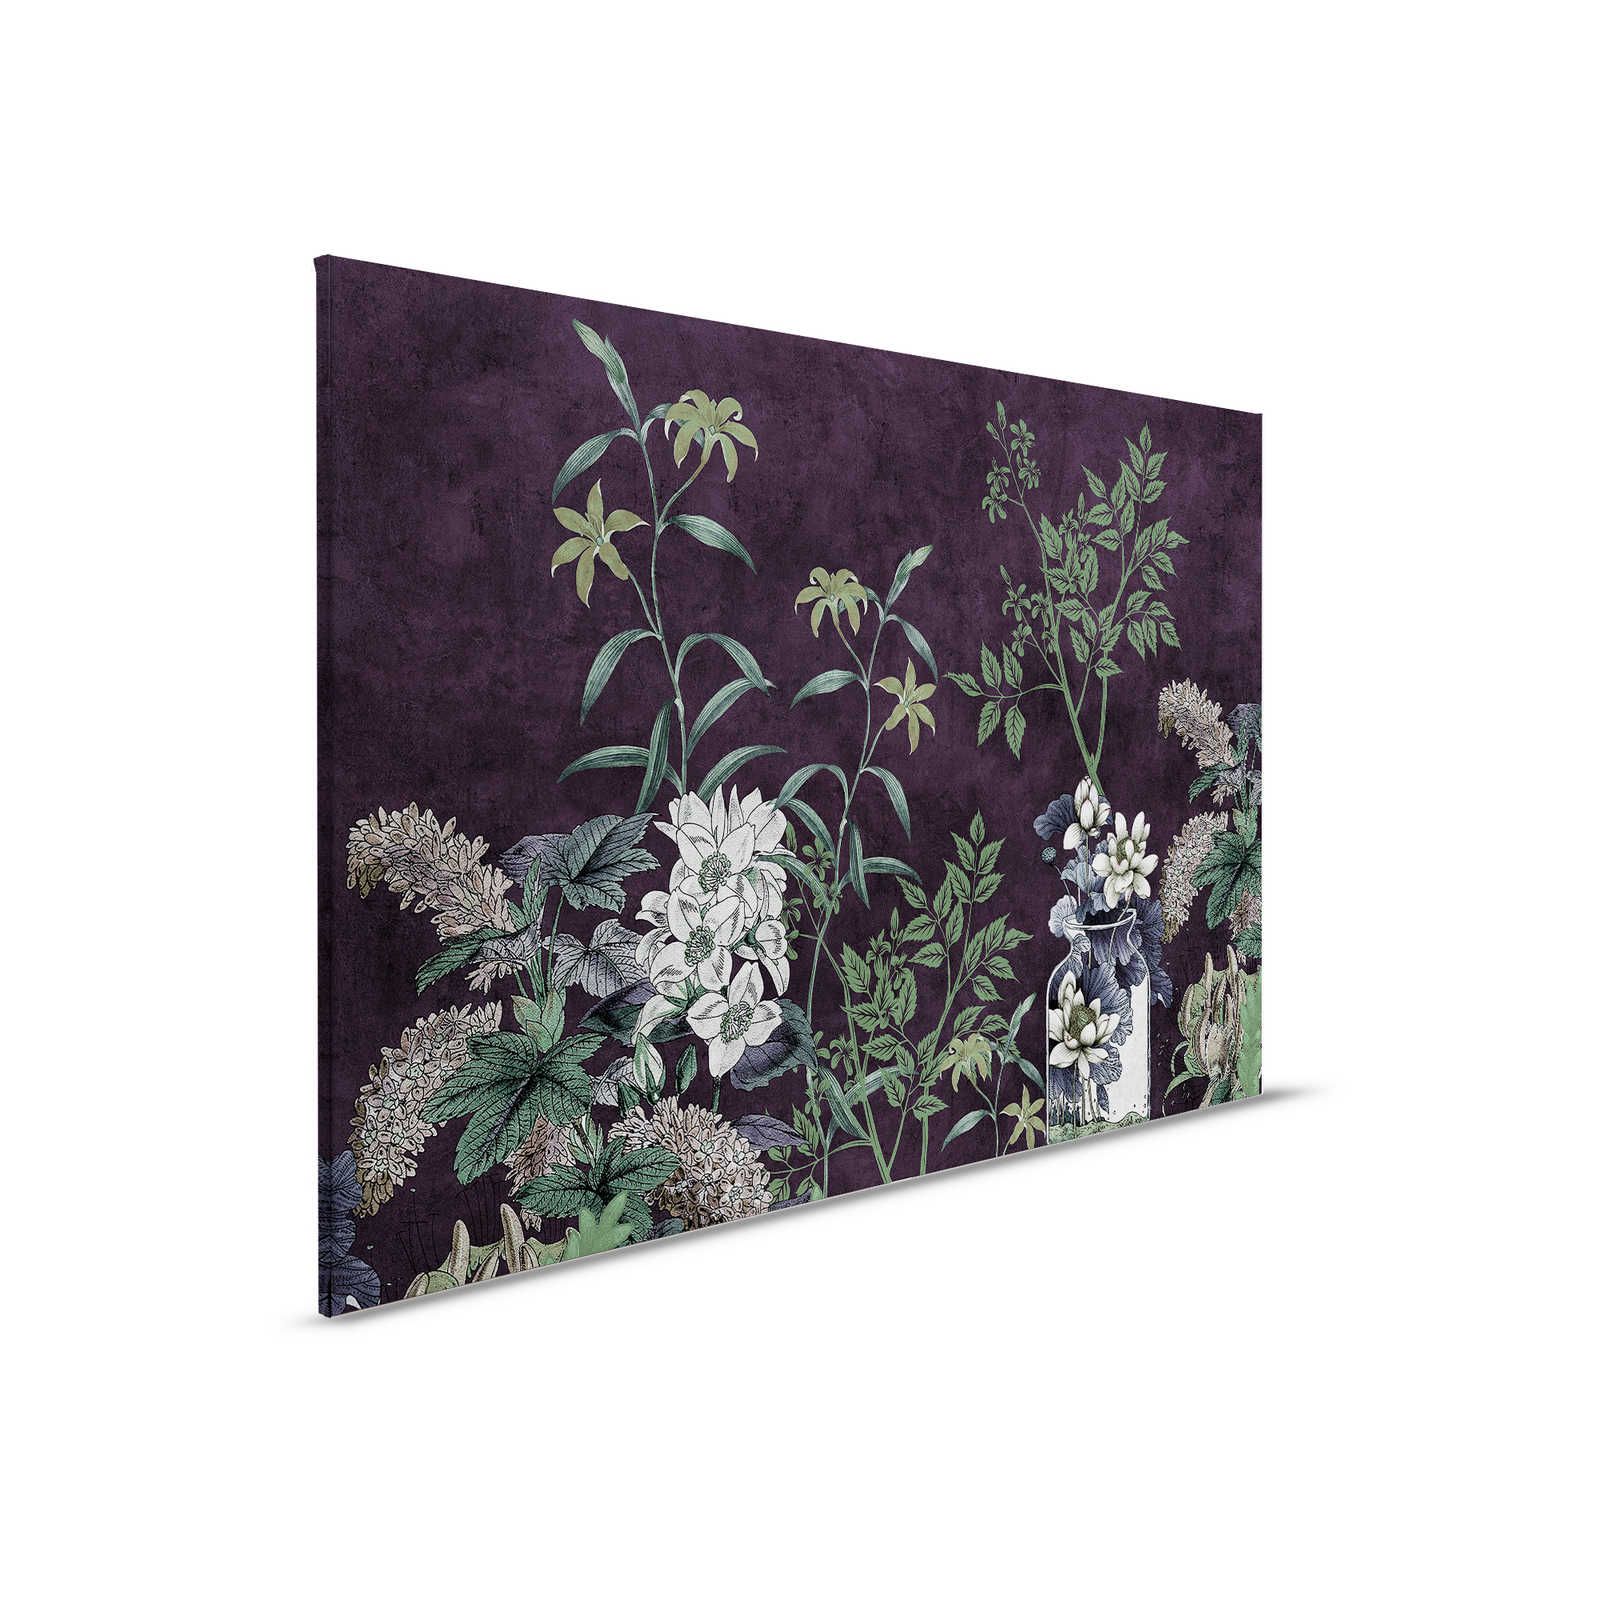 Dark Room 1 - Zwart Canvas Schilderij Botanisch Patroon Groen - 0.90 m x 0.60 m
